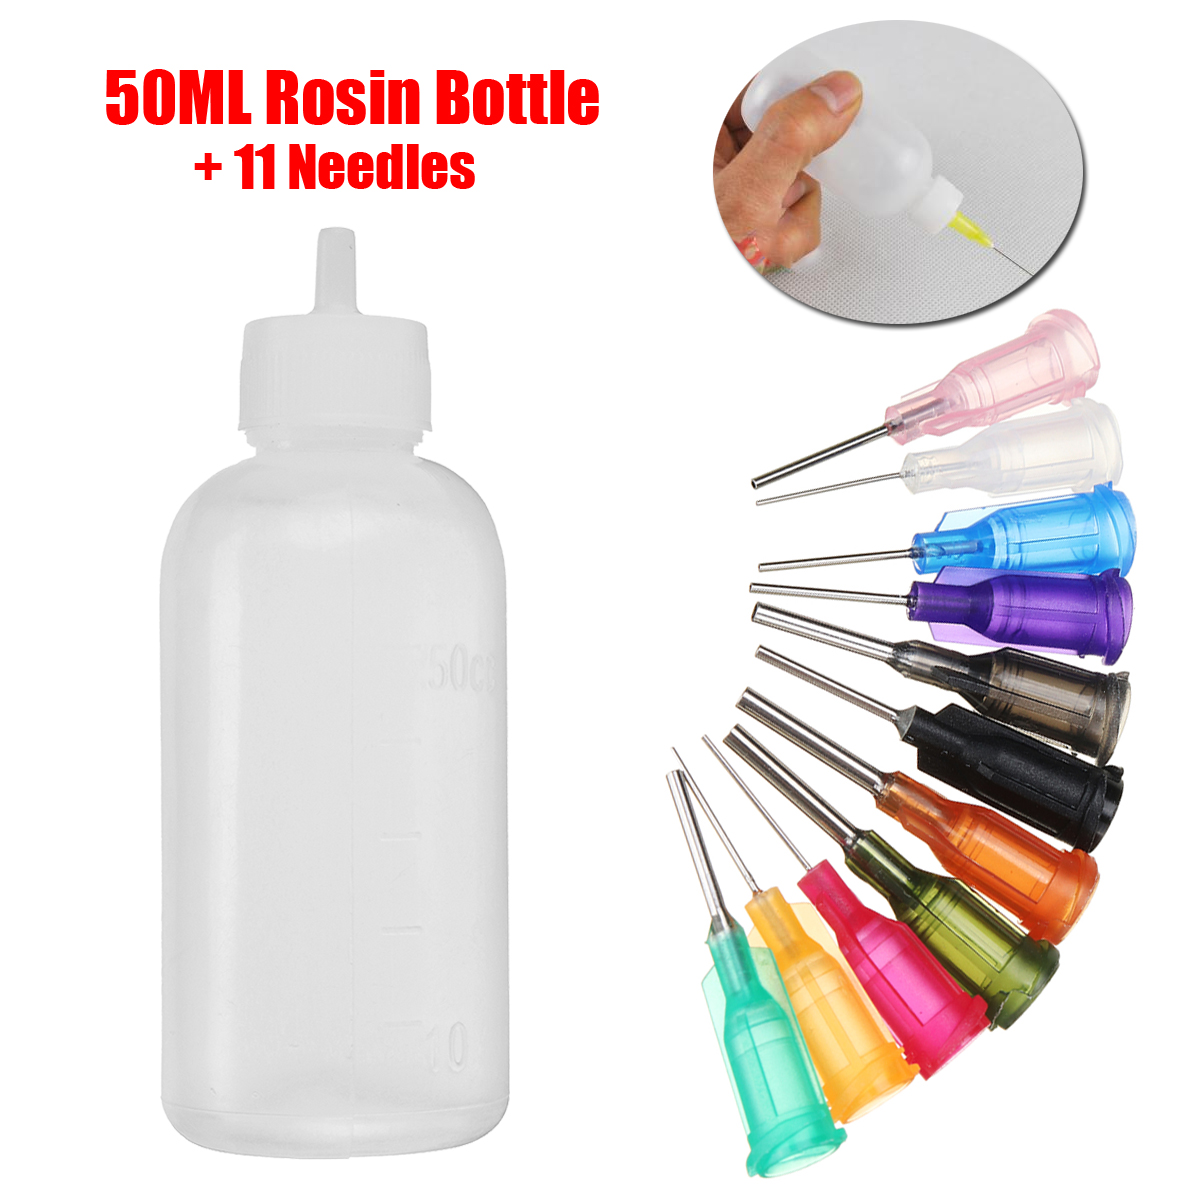 30mL-50mL-Rosin-Flux-Alcohol-Soldering-Solder-Liquid-Contain-Bottle-Paste-with-11-Needles-1374773-1